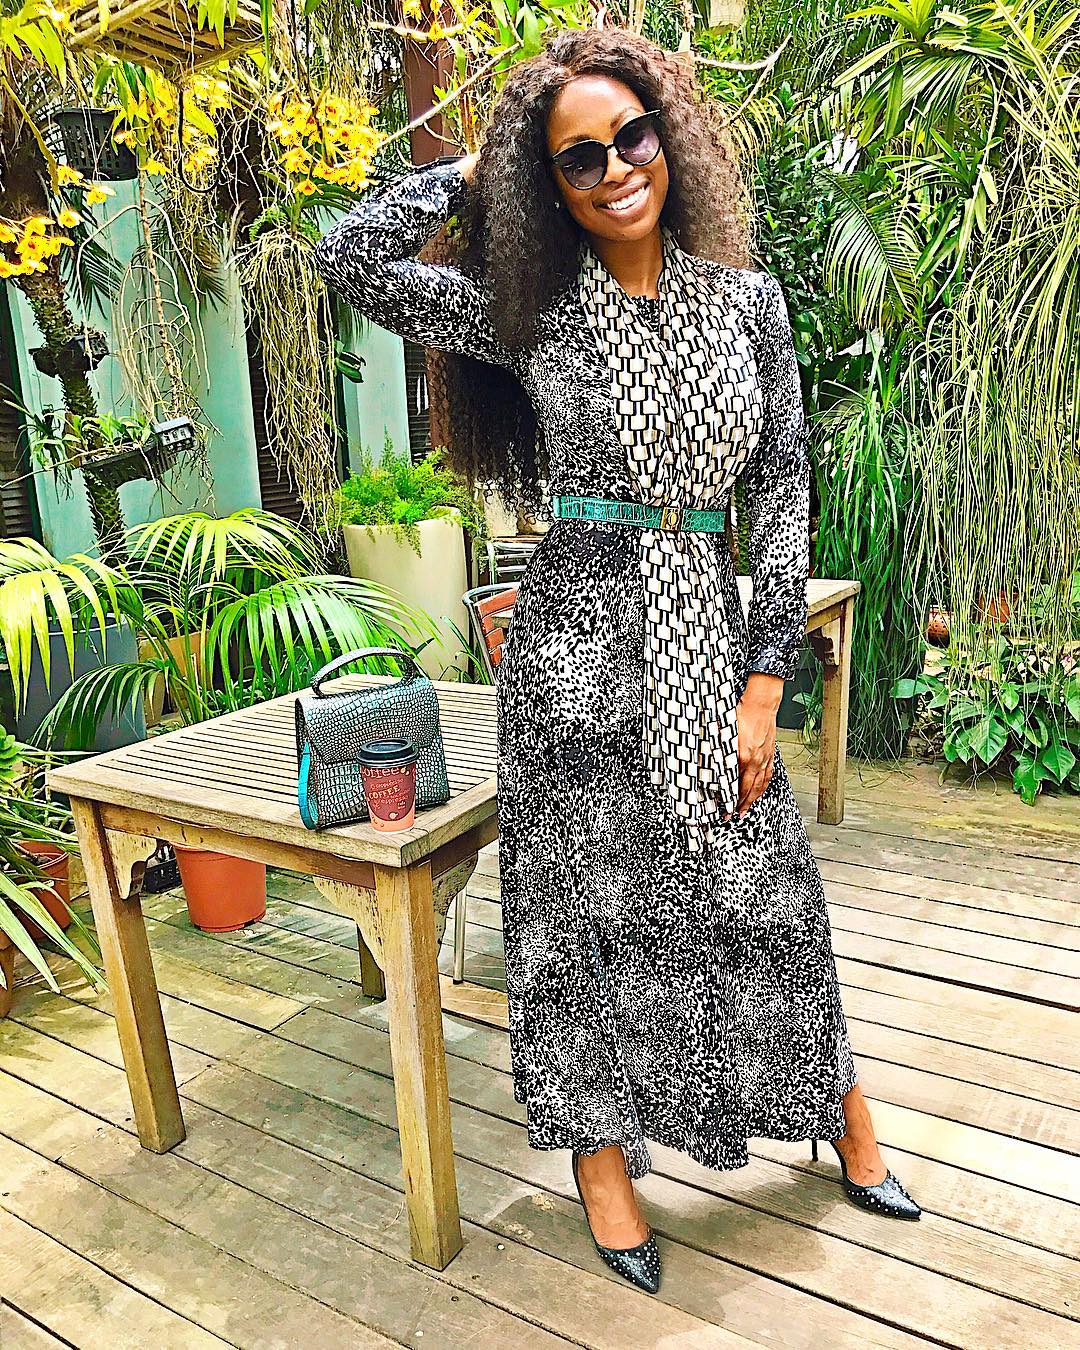 Best Dressed Nigerian Female Celebrities: The Top 10 | Jiji Blog